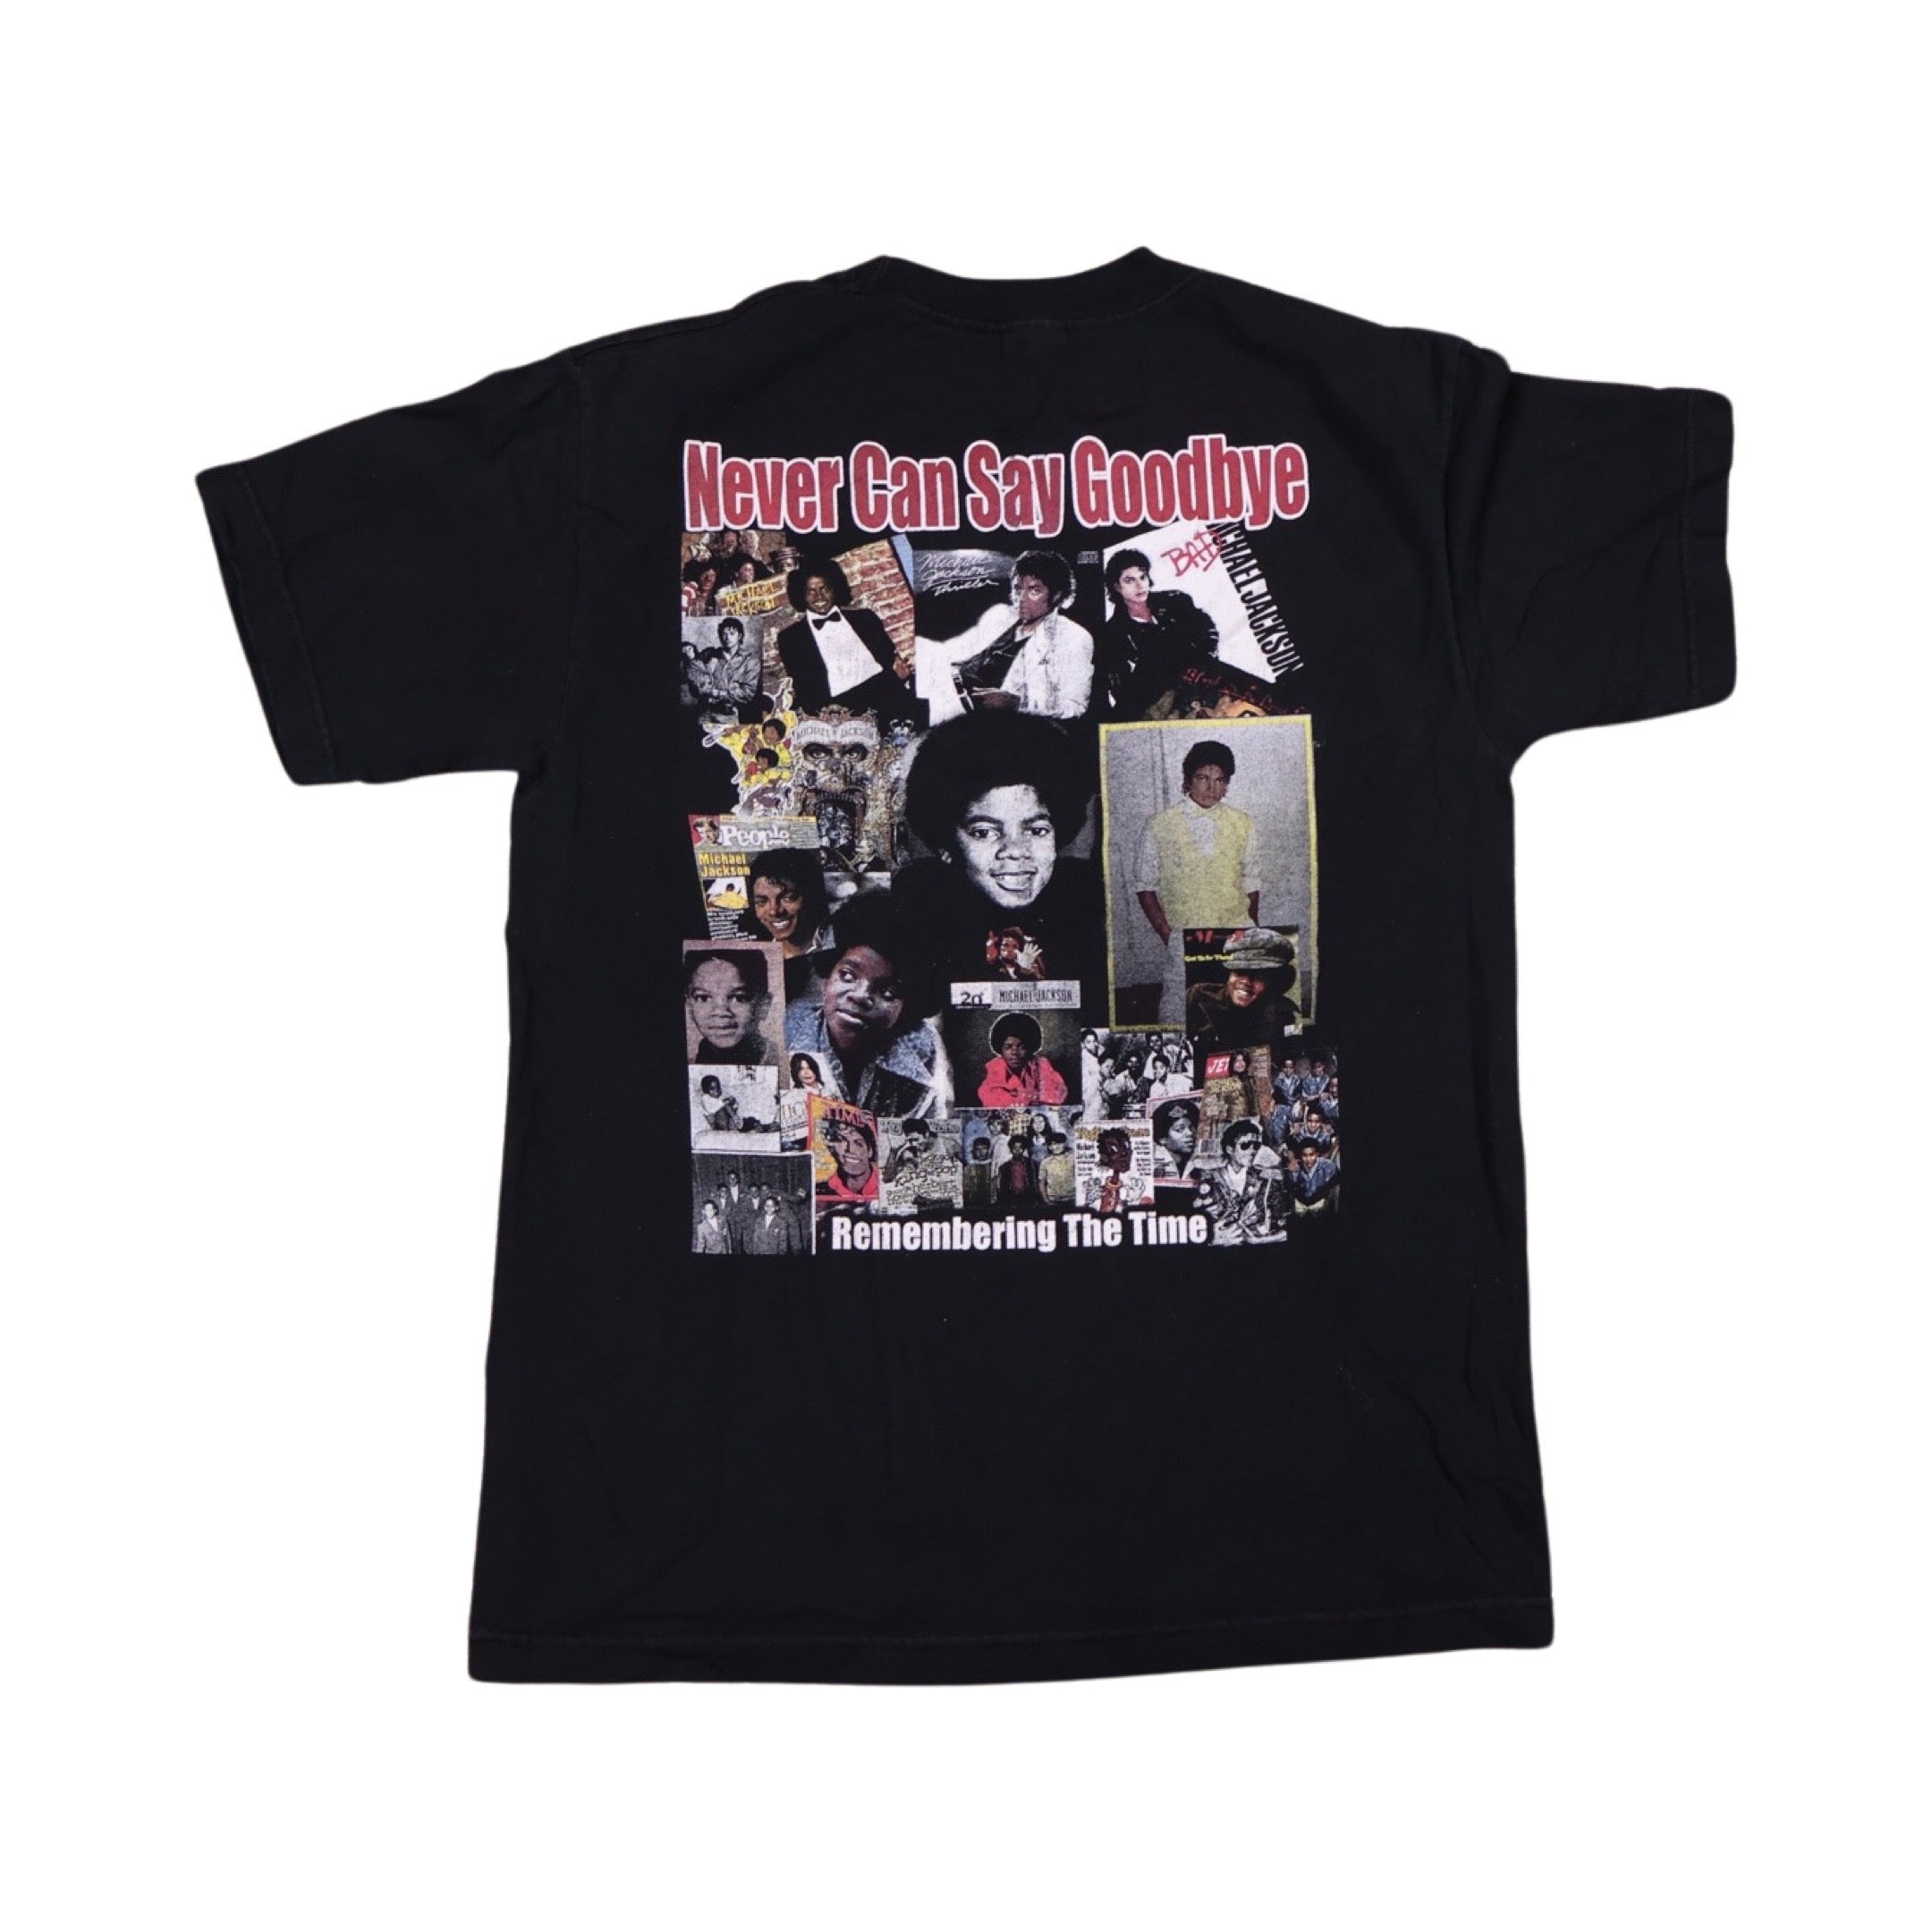 Michael Jackson Memorial T-Shirt (Medium)